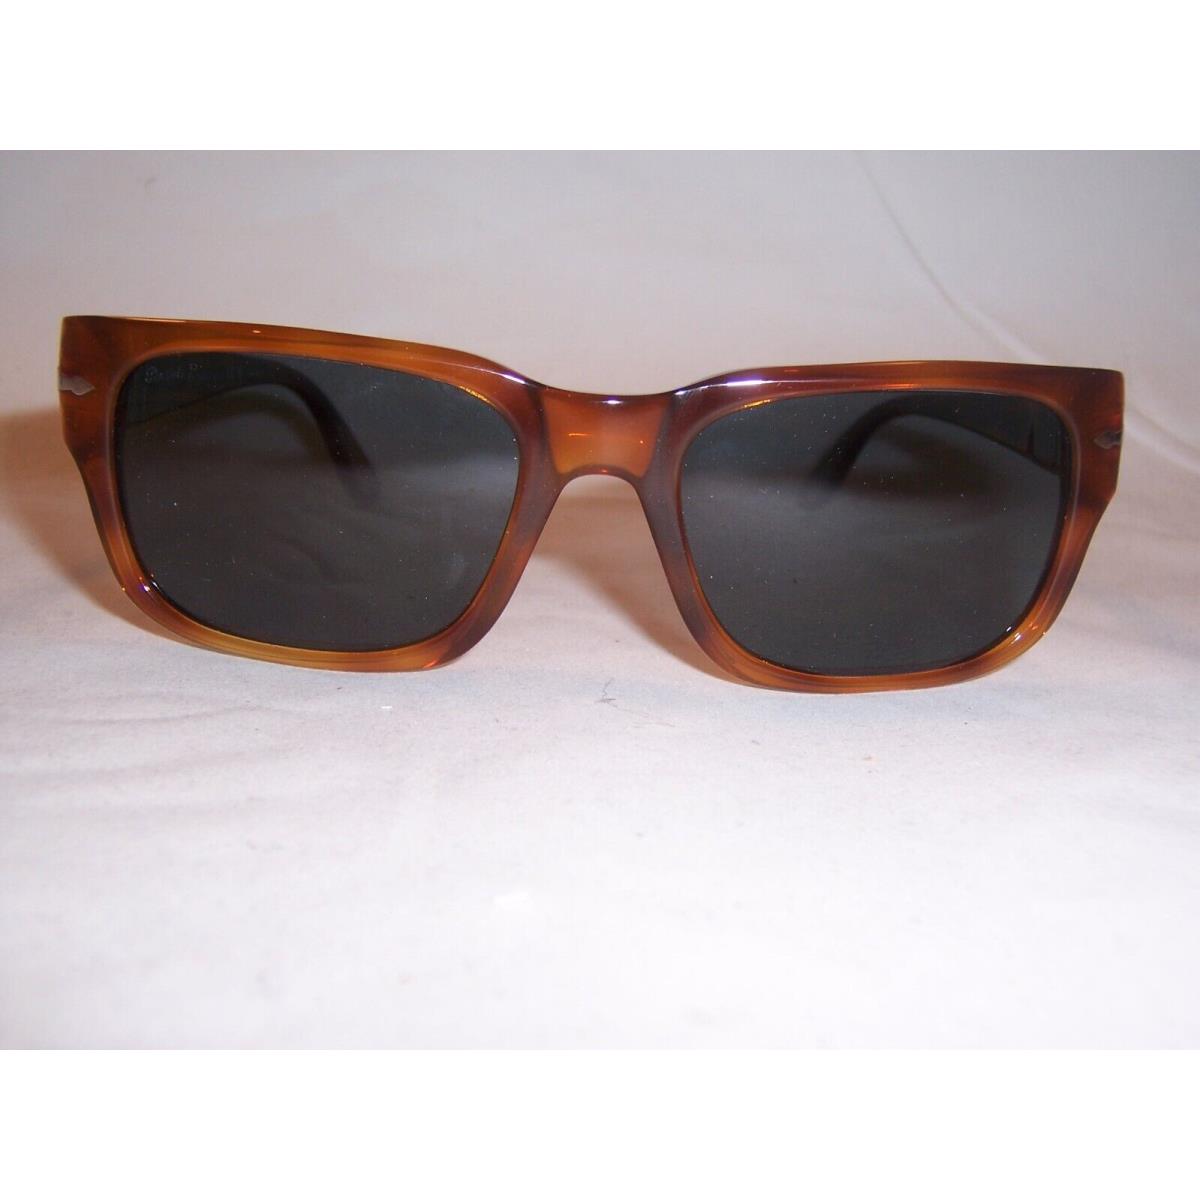 Persol sunglasses  - Terra Di Siena Frame, Dark Blue Lens 2